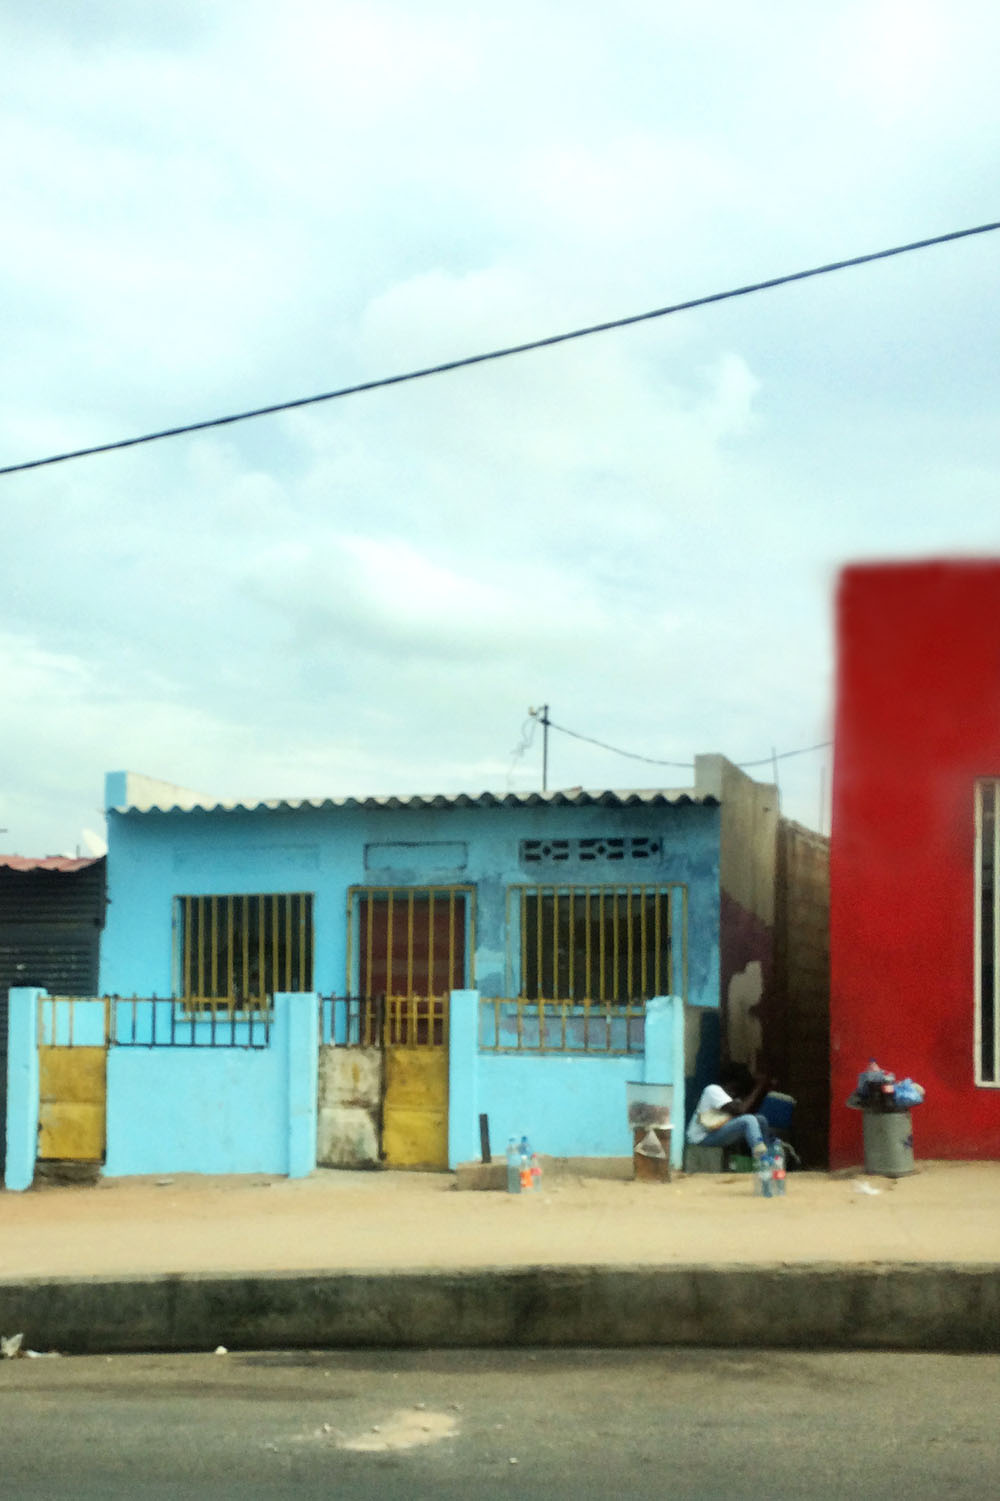 Luanda, Part 3: Colourful Houses